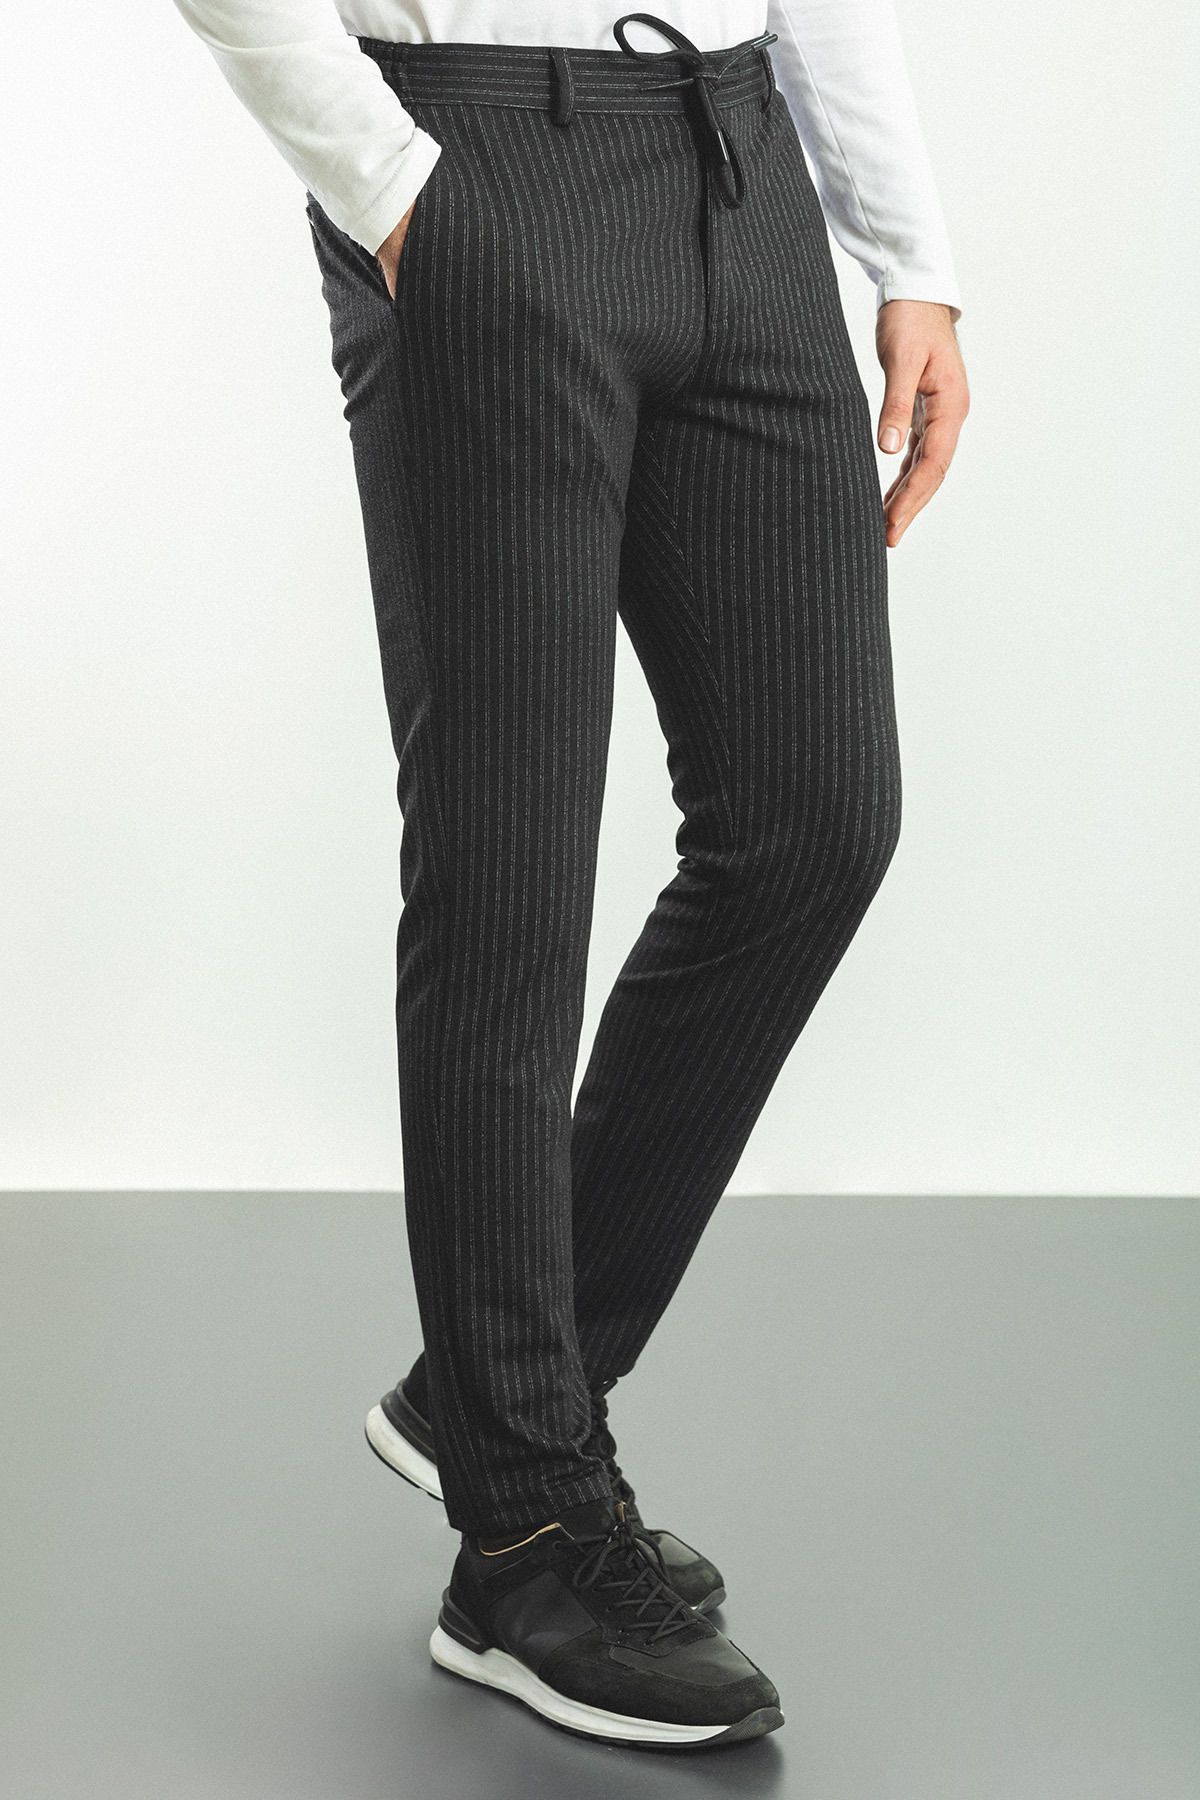 Mcr Çizgili Siyah Renk Super Slim Fit Beli Lastikli Ipli Erkek Pantolon